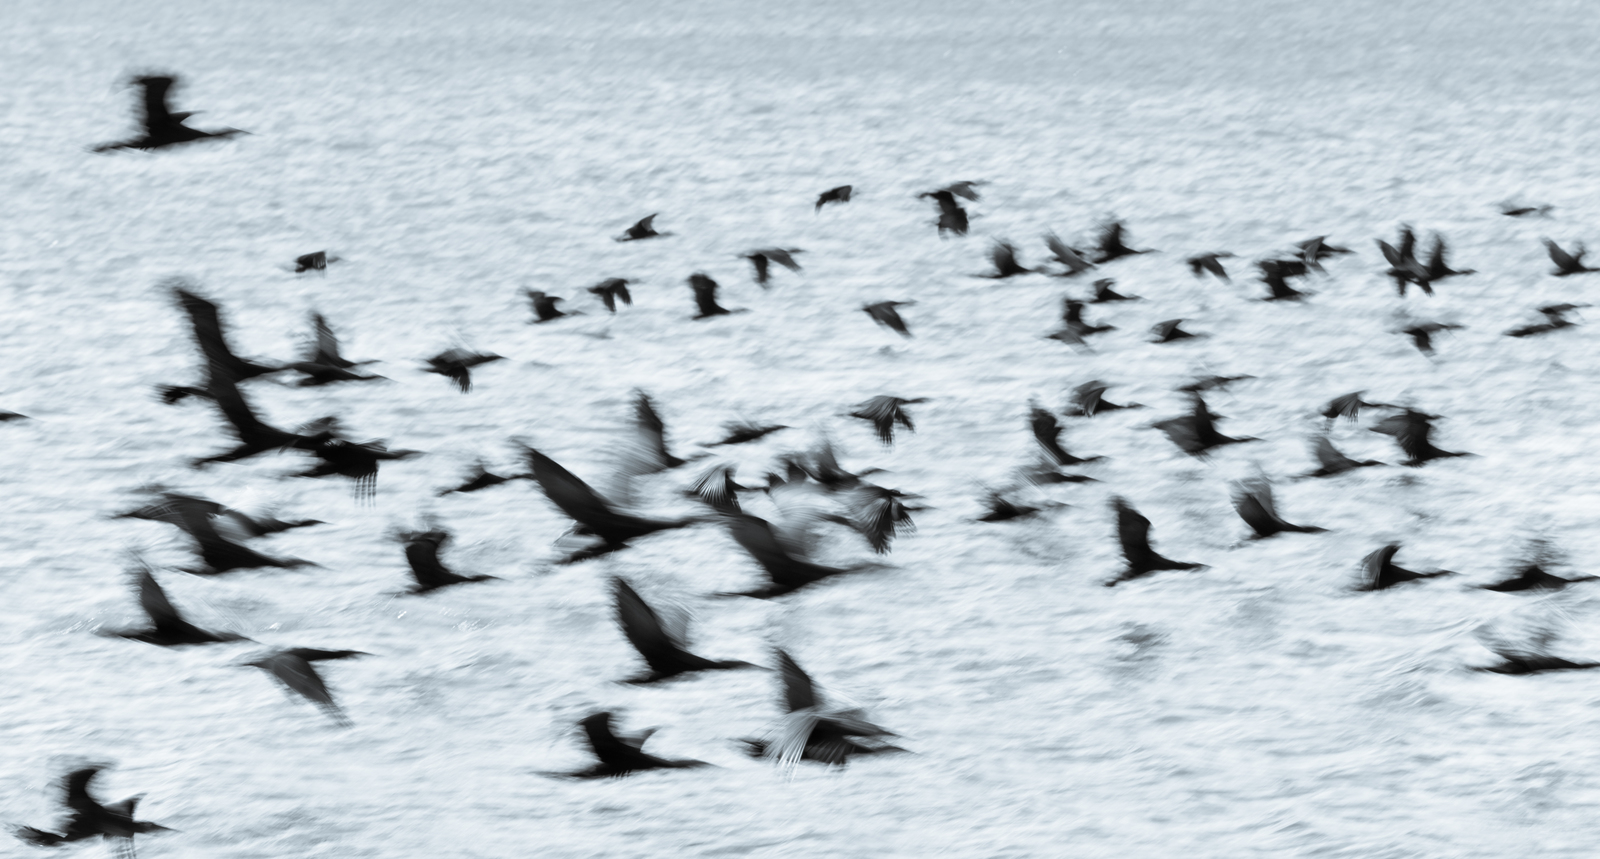 blurred image of flock of birds flying away